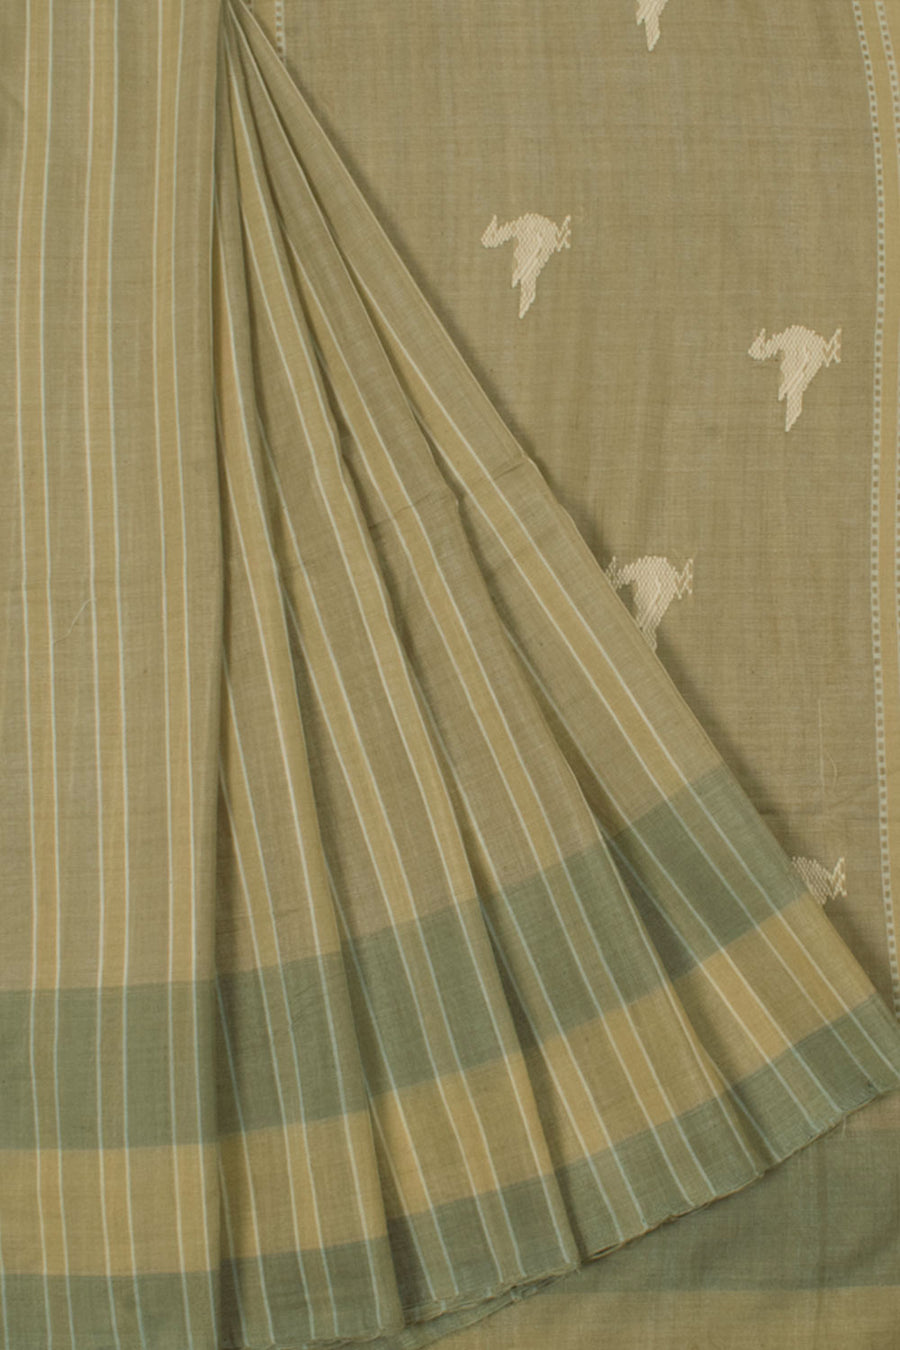 Handloom Natural Dye Tussar Cotton Saree with Stripes Design and Birds Motifs Pallu